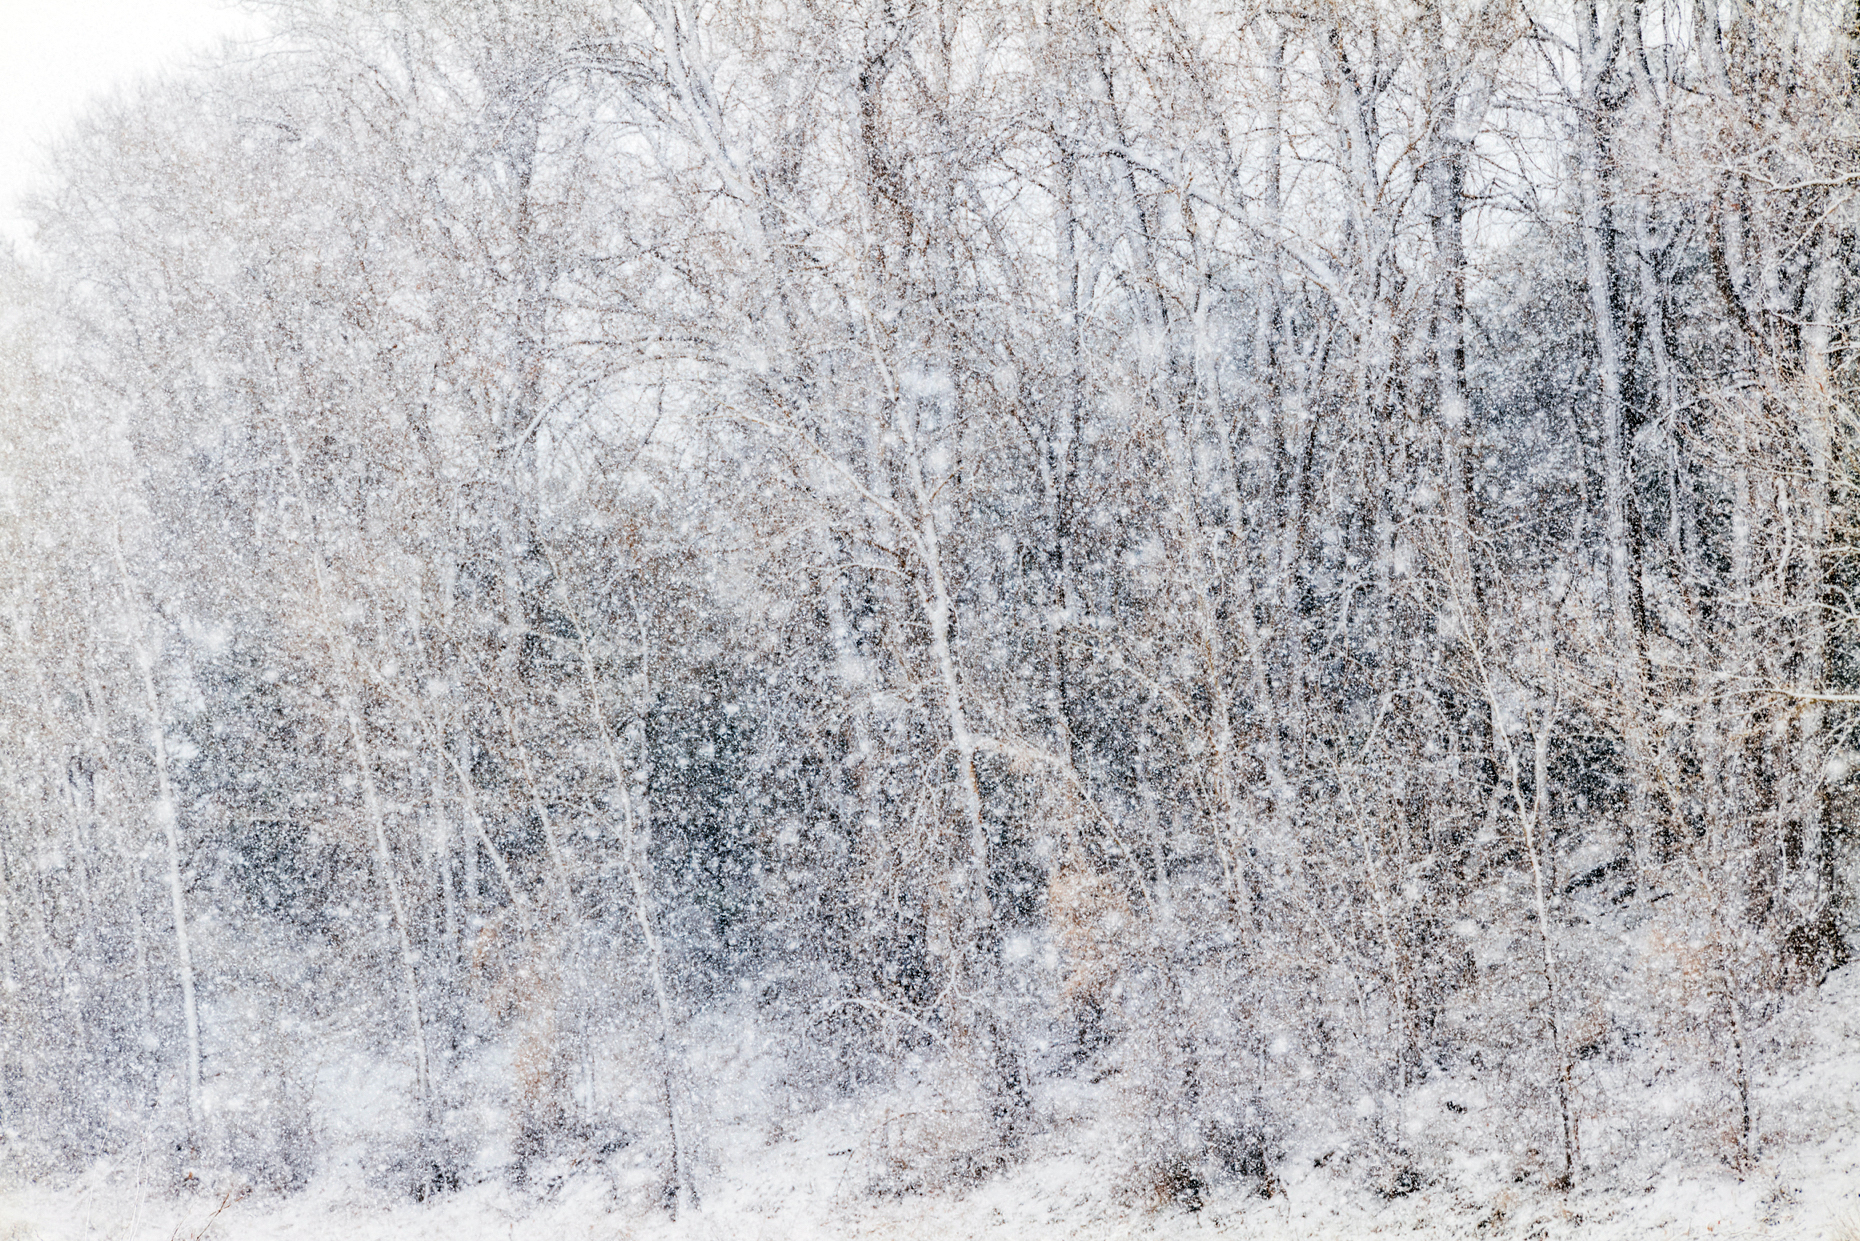 Fremont Cottonwood trees in November snow storm; Vandaveer Ranch; Salida; Colorado; USA